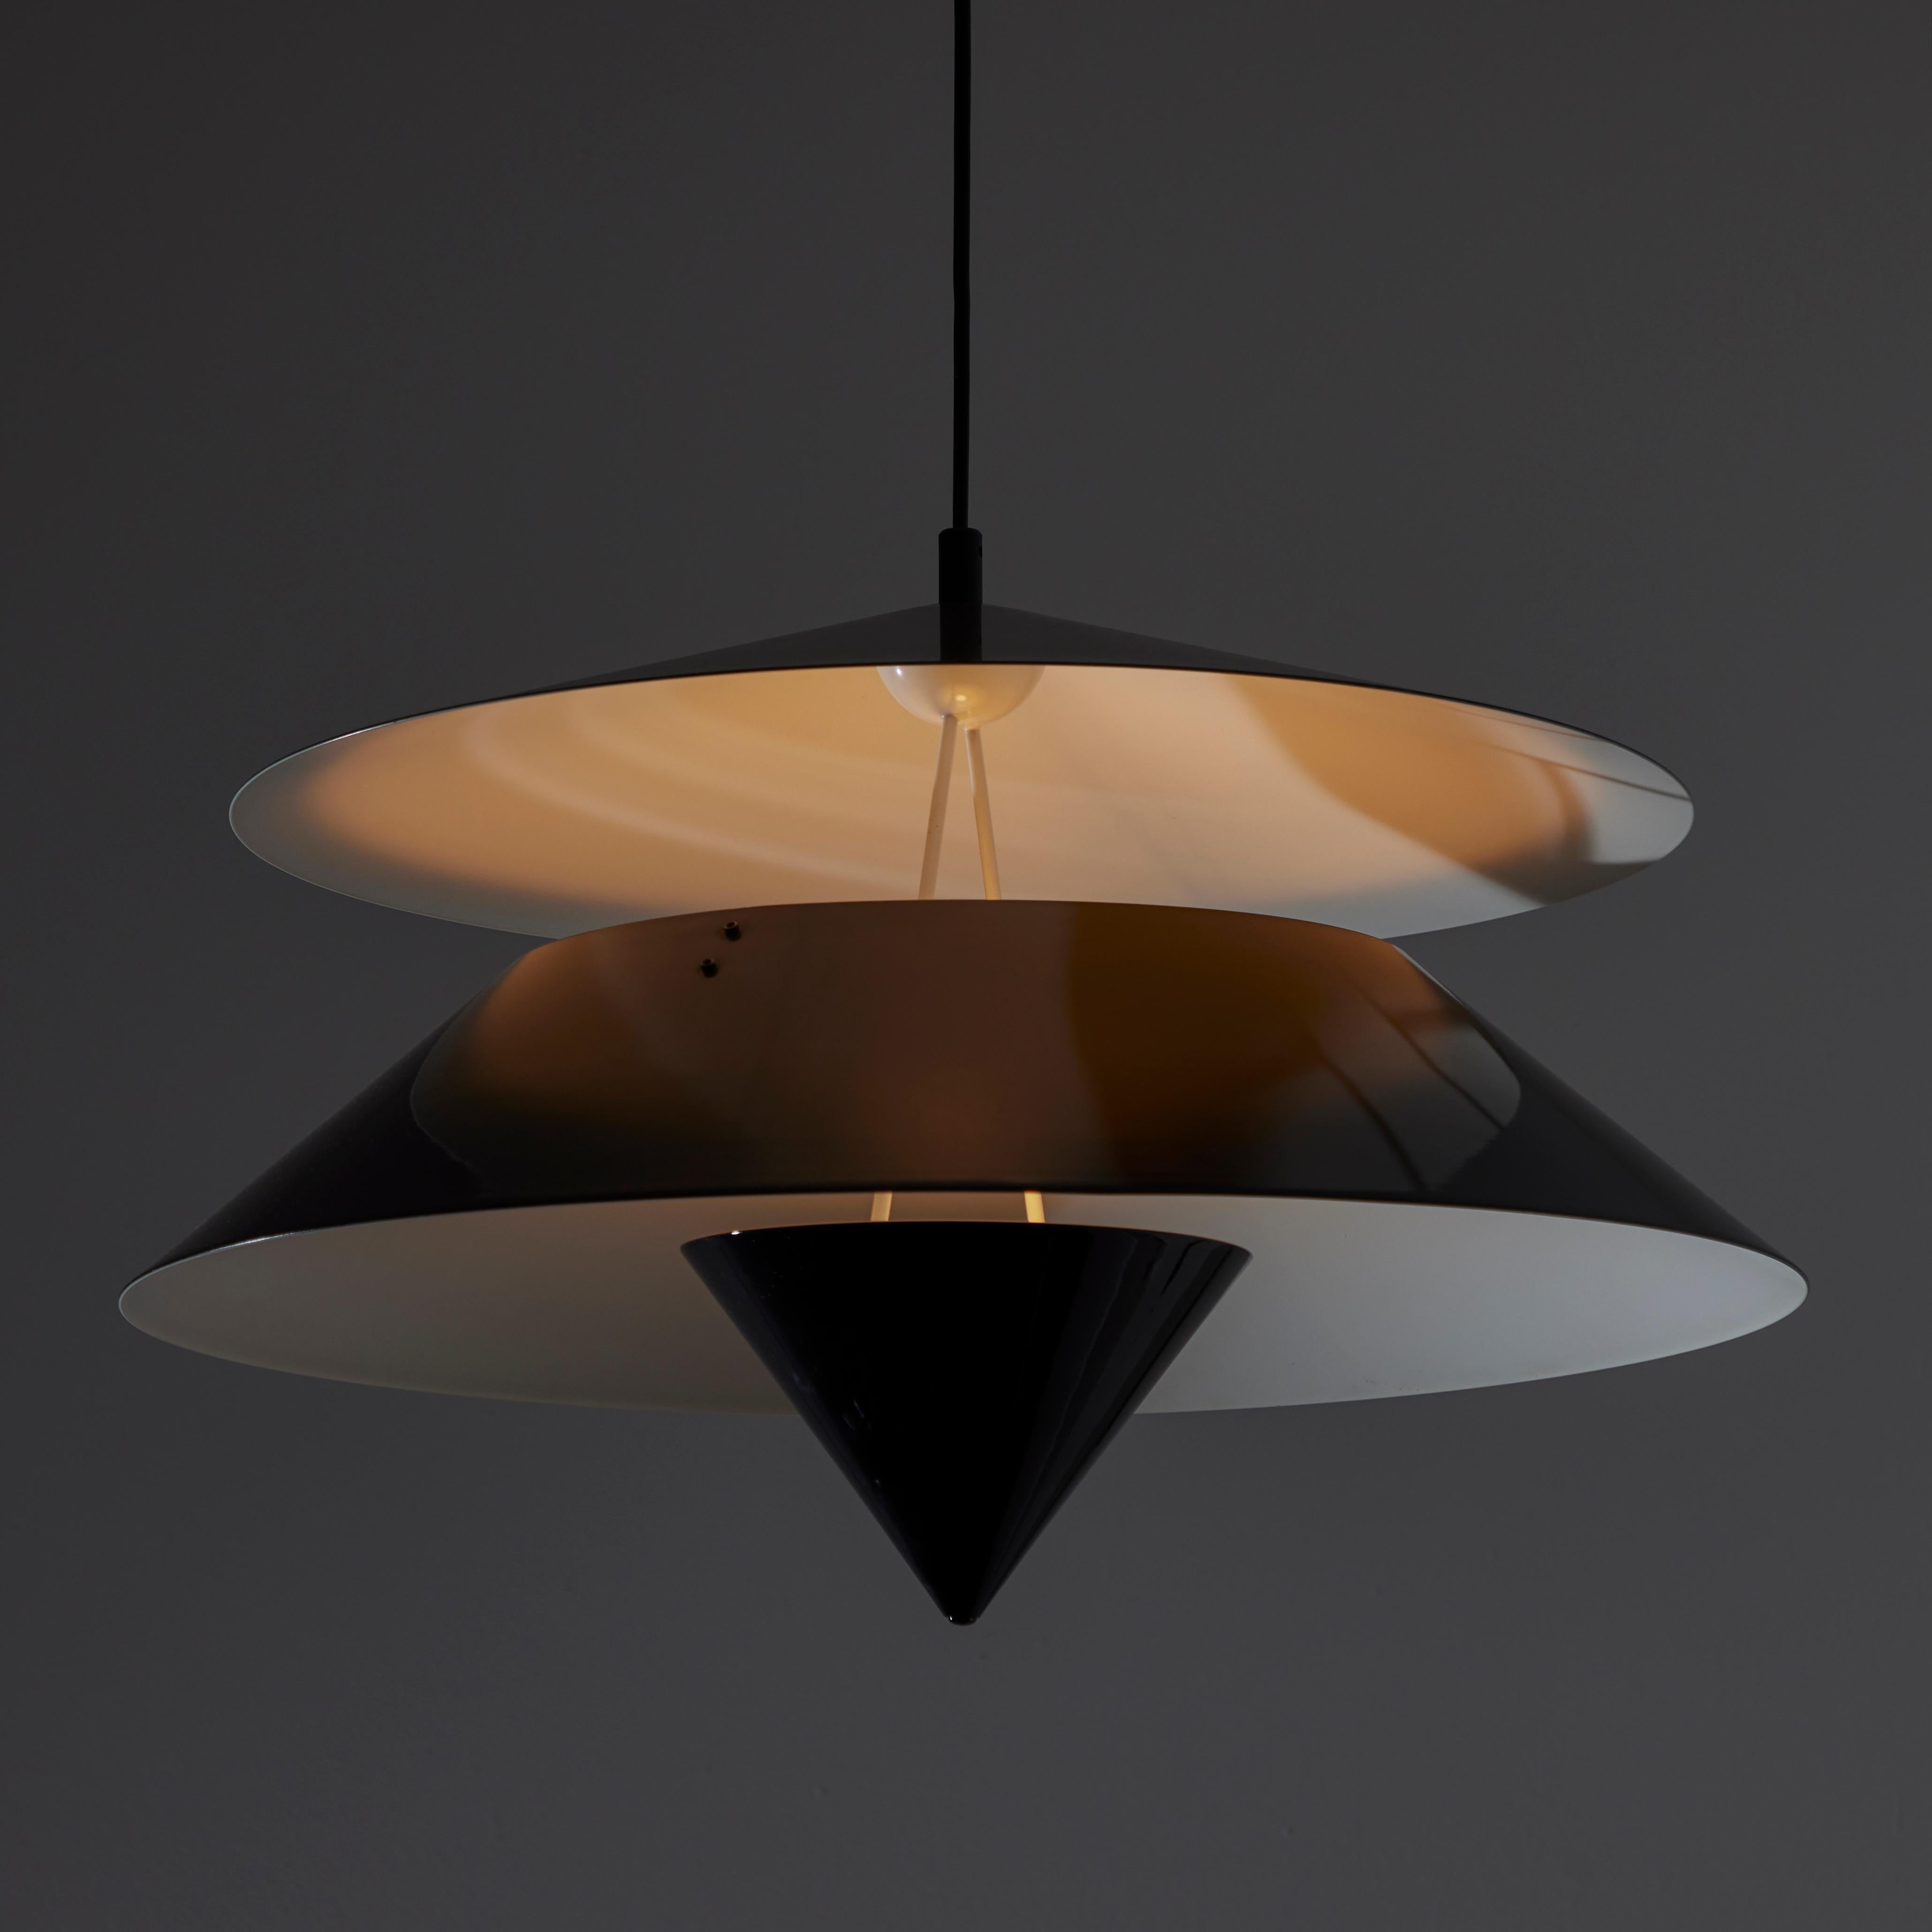 Modern 'Akaari' Ceiling Light by Vico Magistretti for Oluce